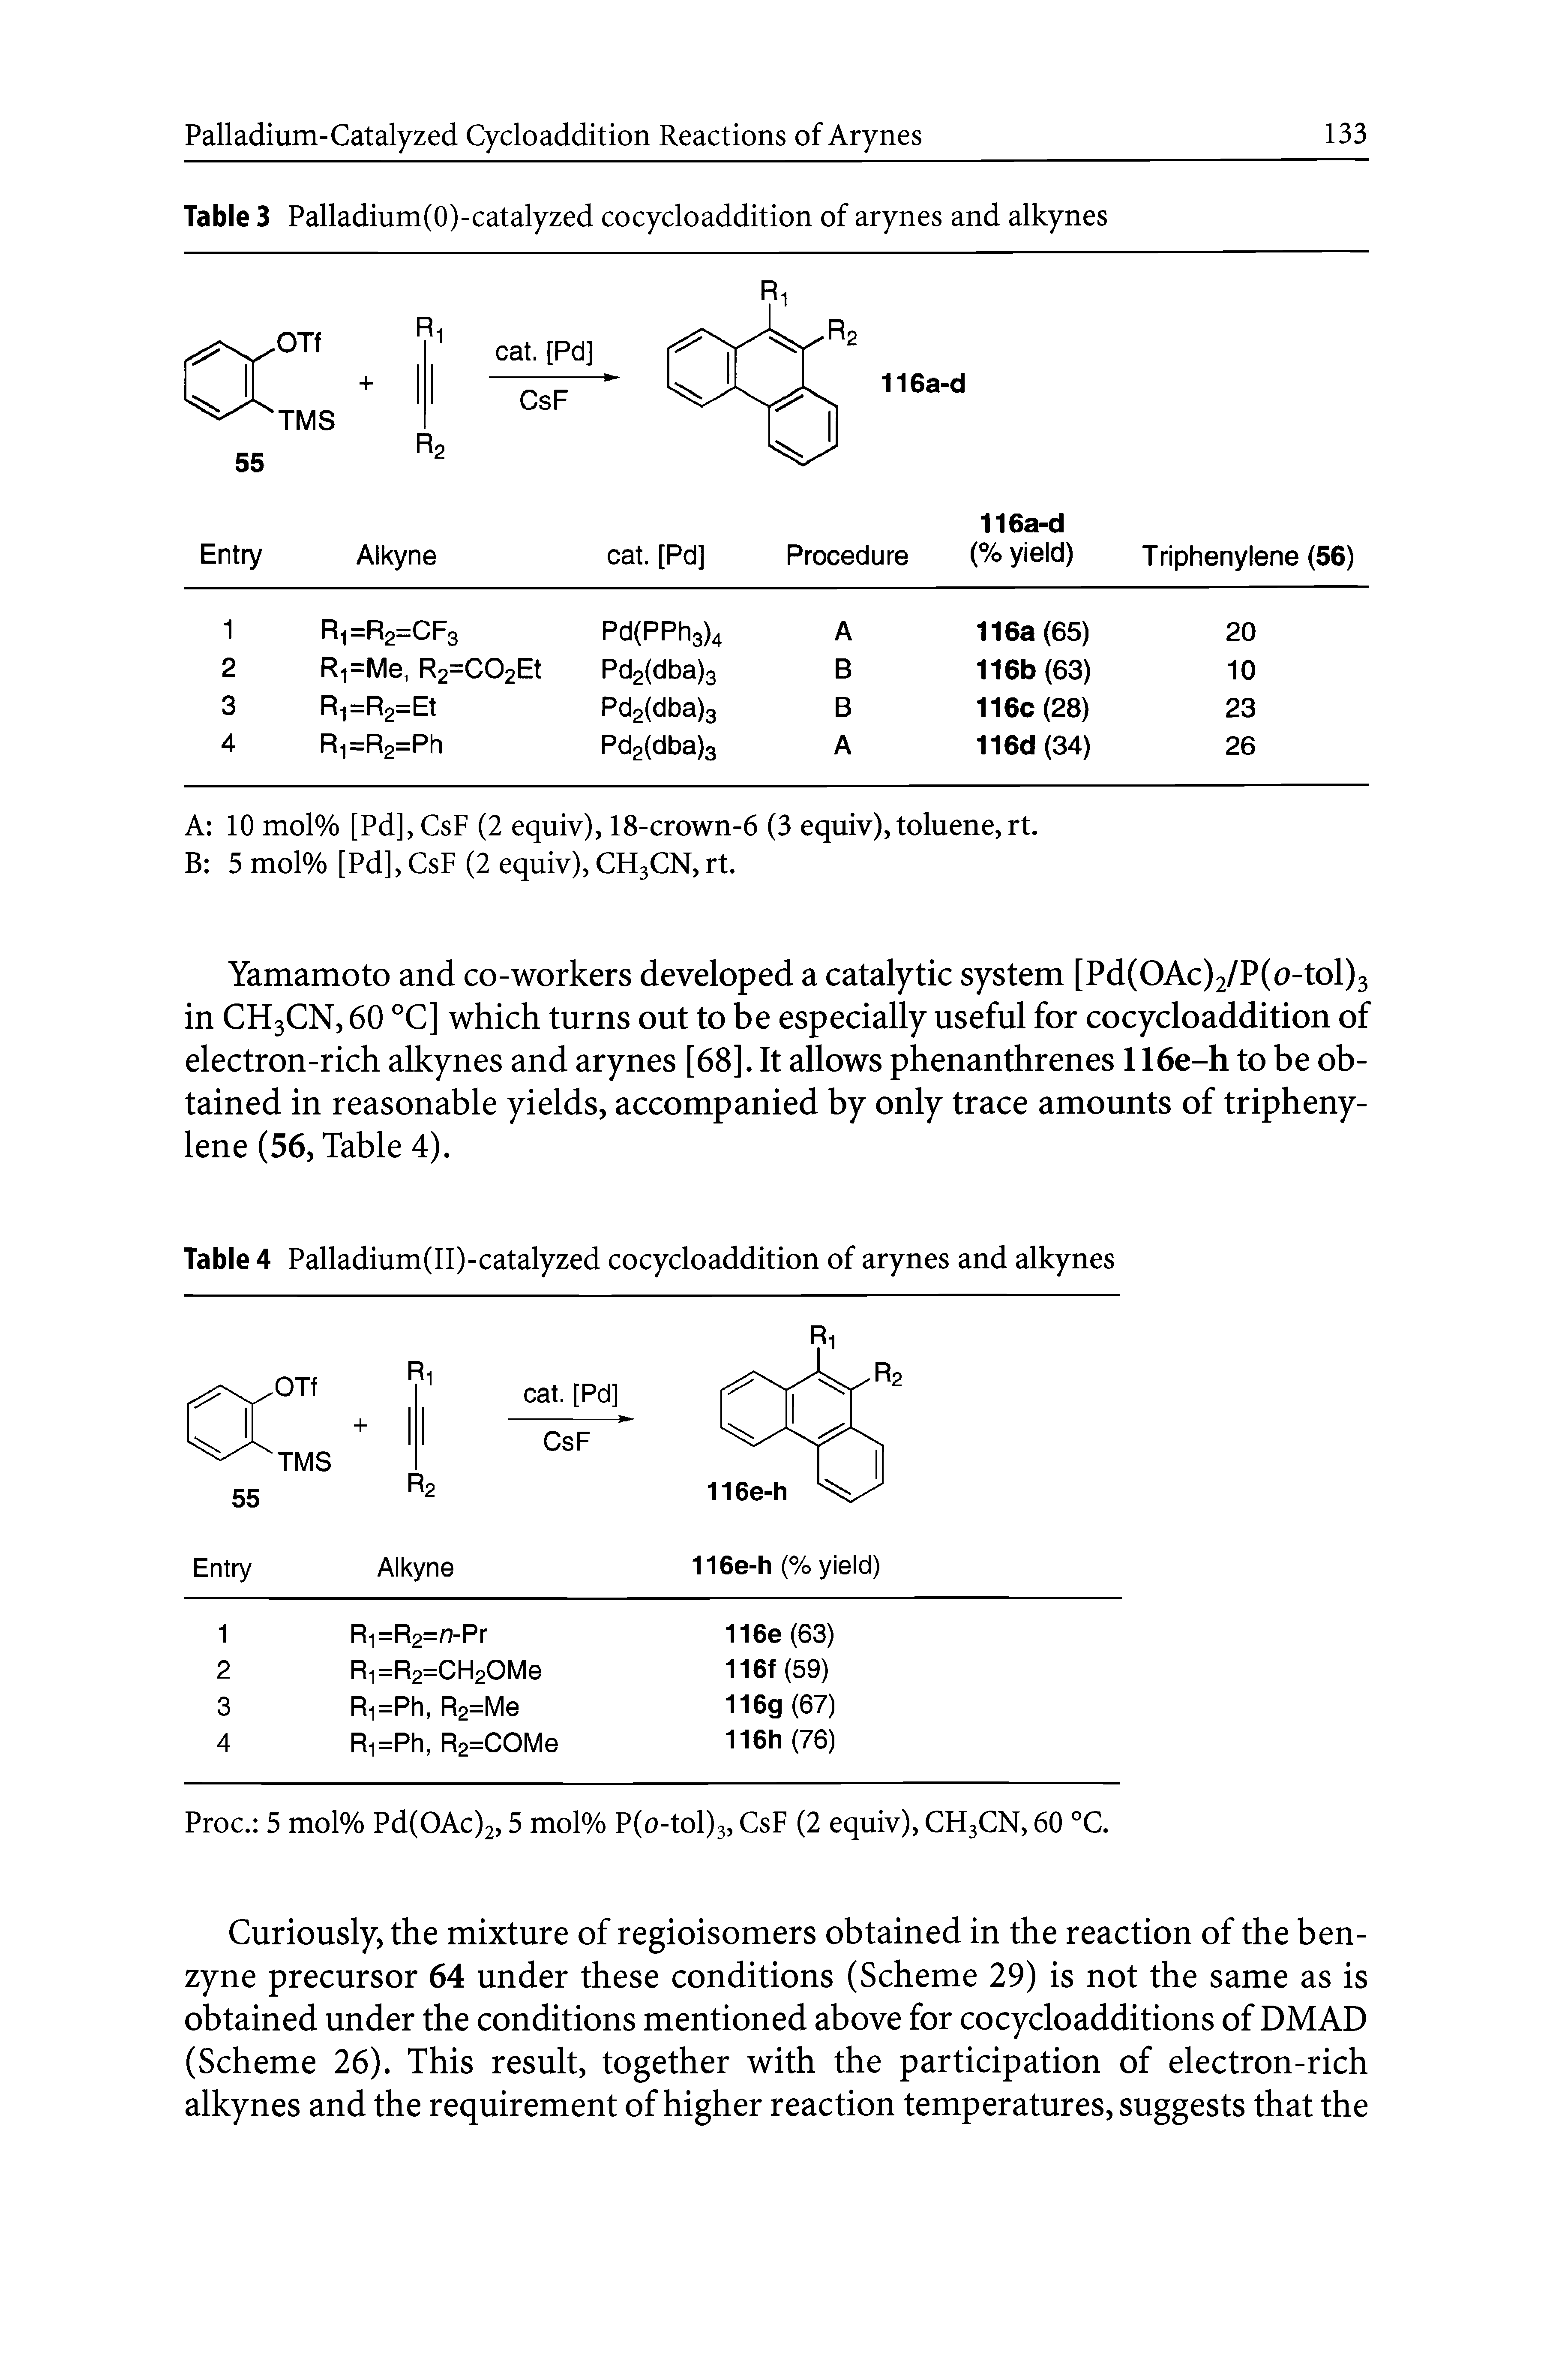 Table 4 Palladium(II)-catalyzed cocyclo addition of arynes and alkynes...